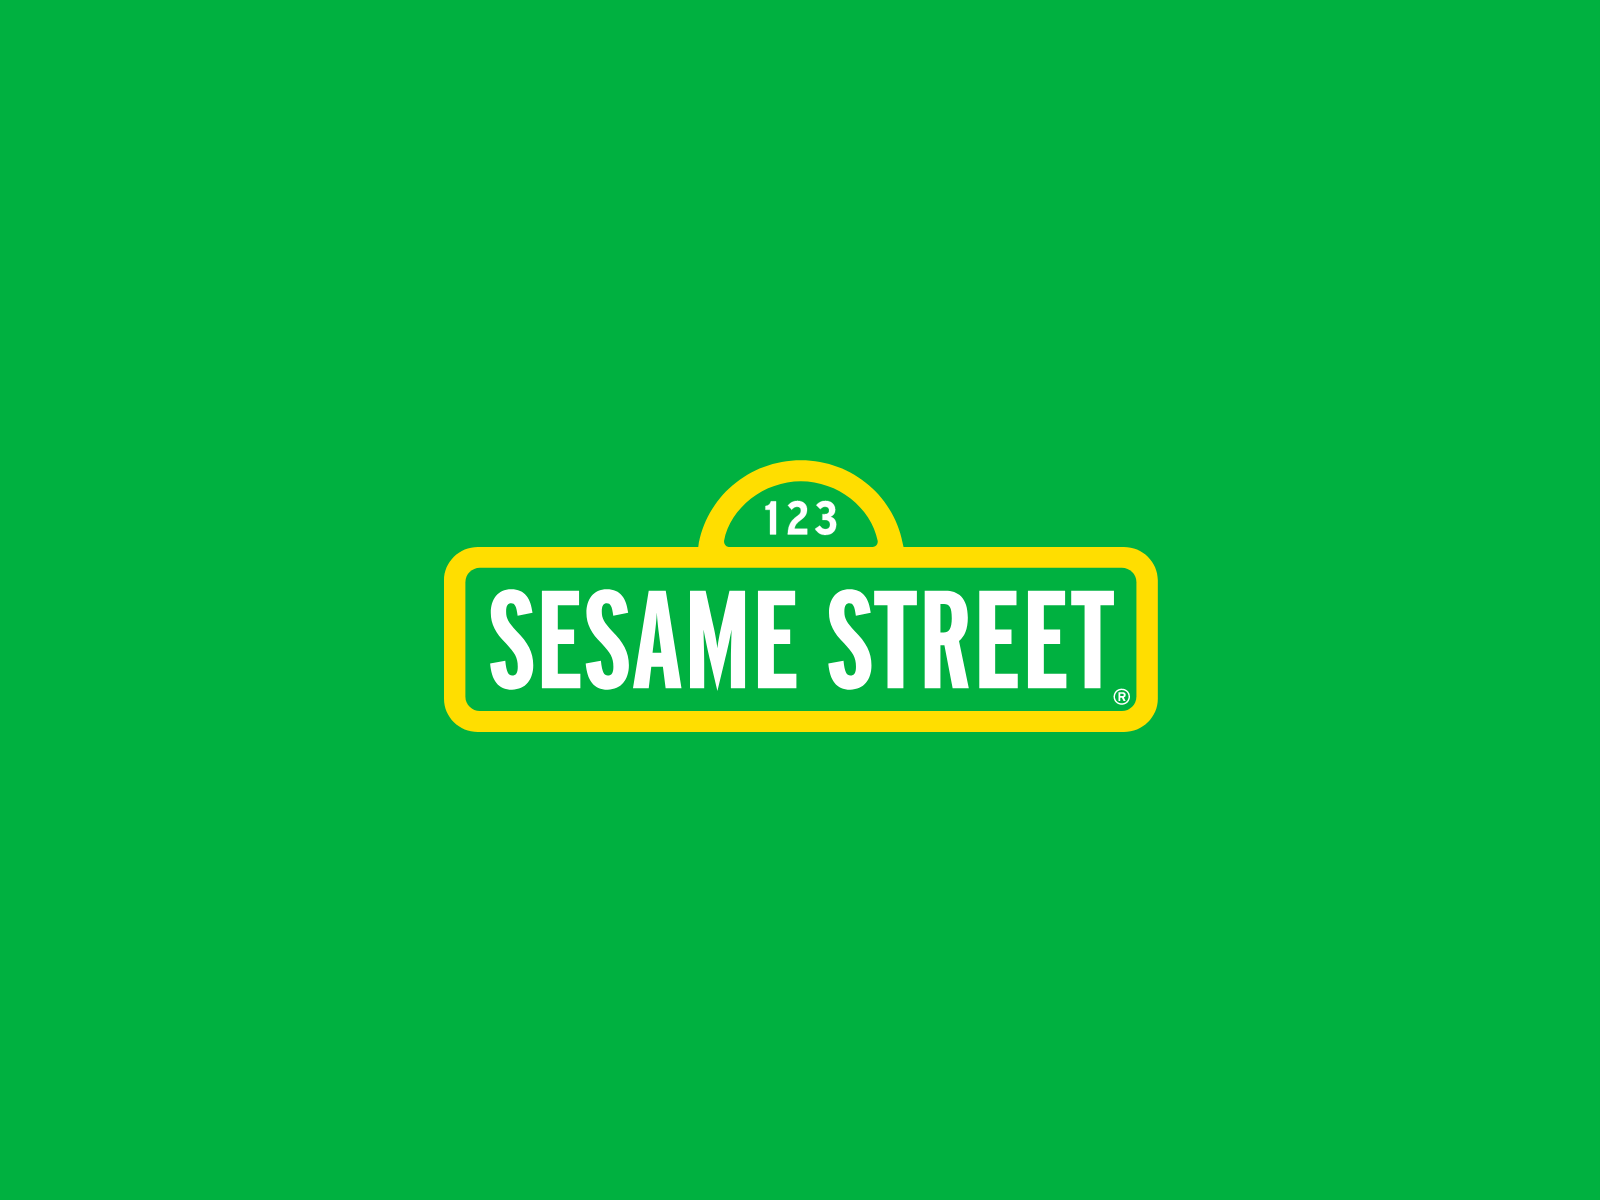 Sesame Street Preschool Games Videos Coloring Pages To Help Kids Grow Smarter Stronger Kinder